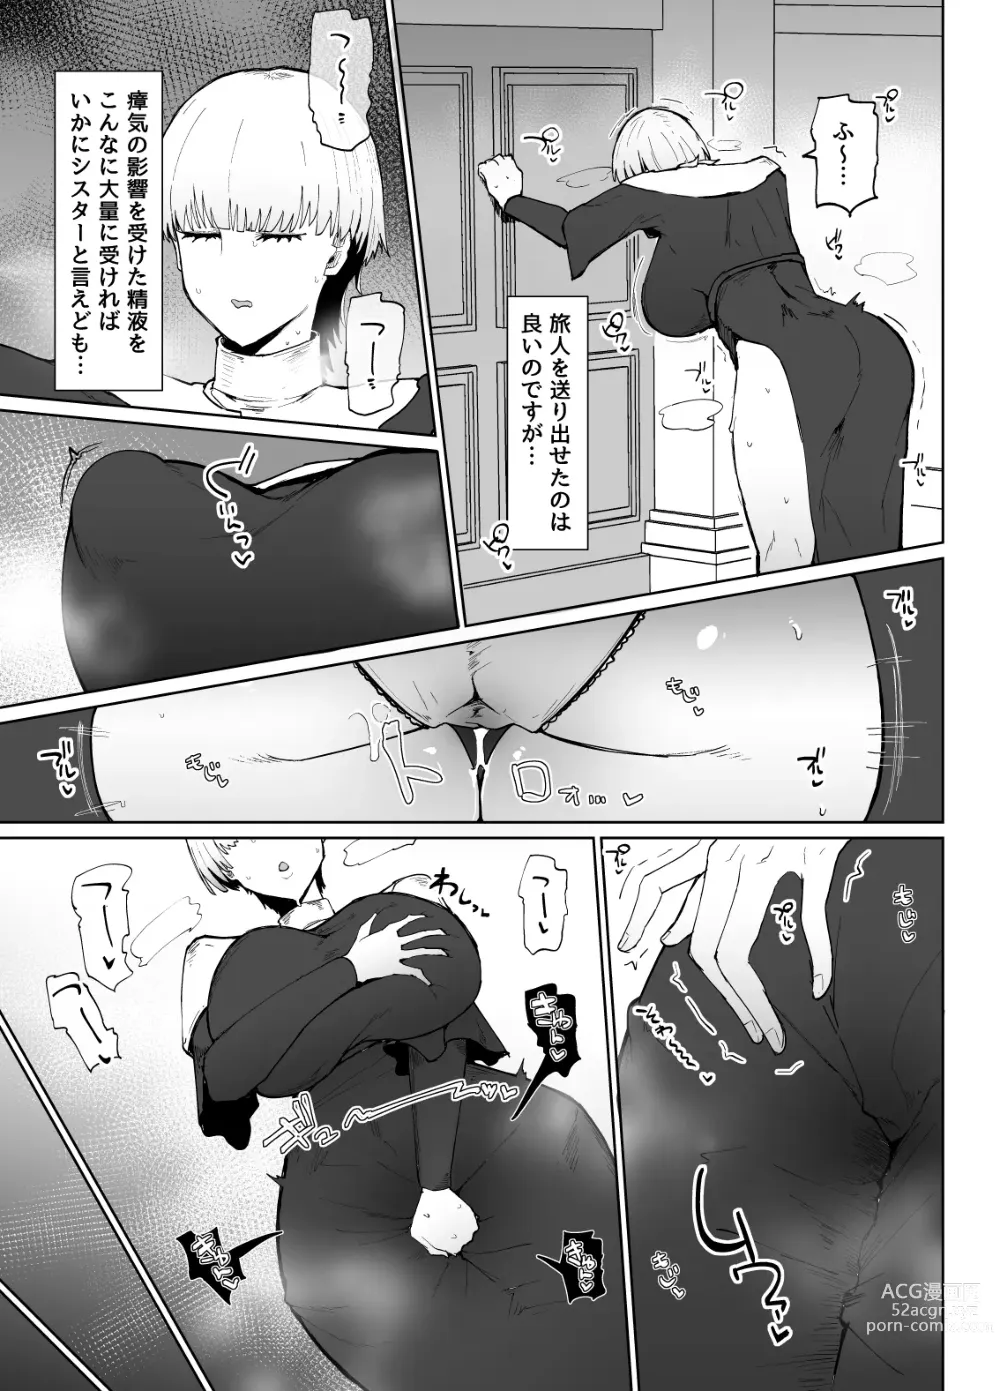 Page 22 of doujinshi 糸目でデカケツで絶対に孕まないオナホシスター